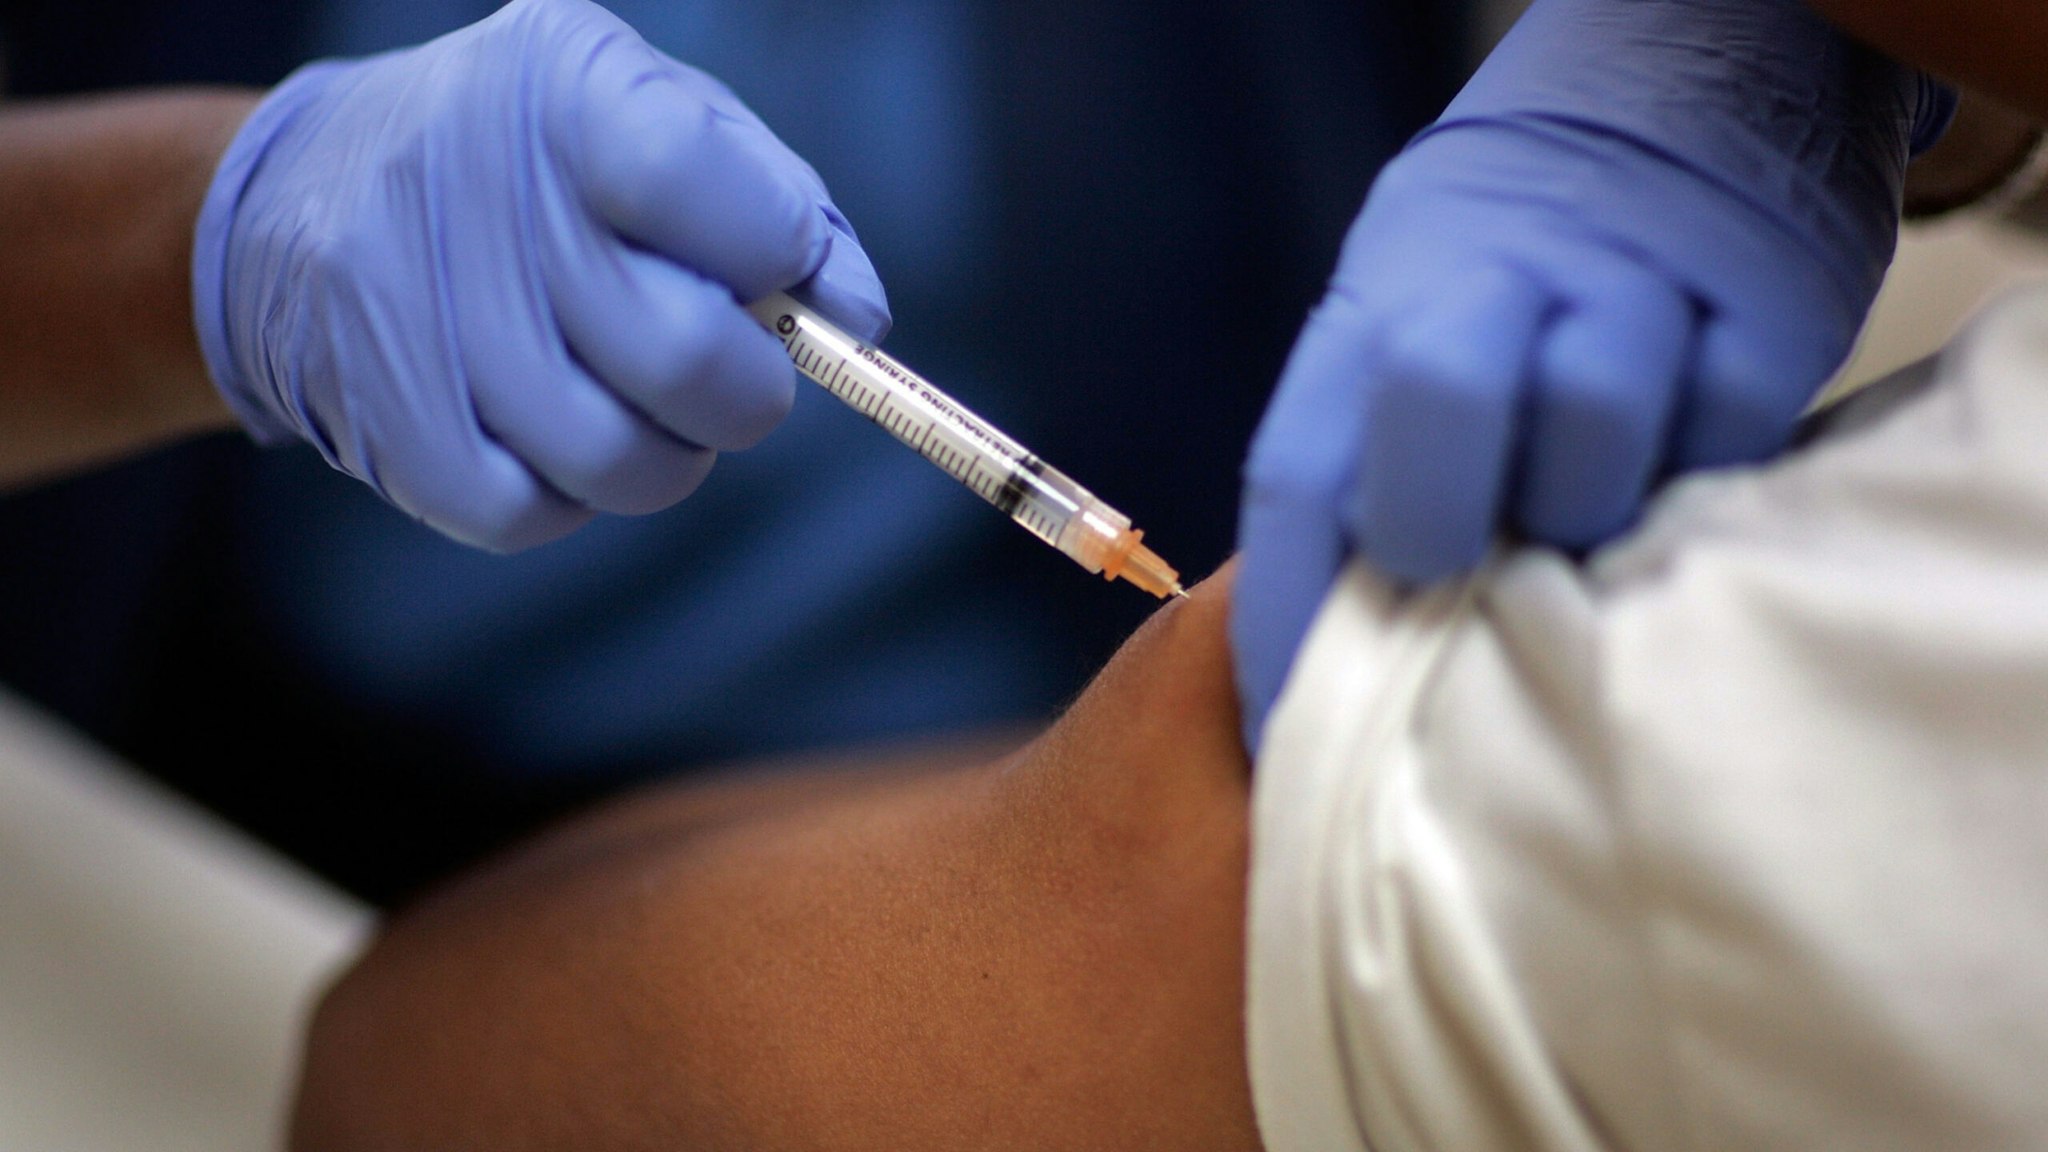 Josette Thomas, a school nurse, gives a child an immunization shot August 8, 2007 in Hialeah, Florida.